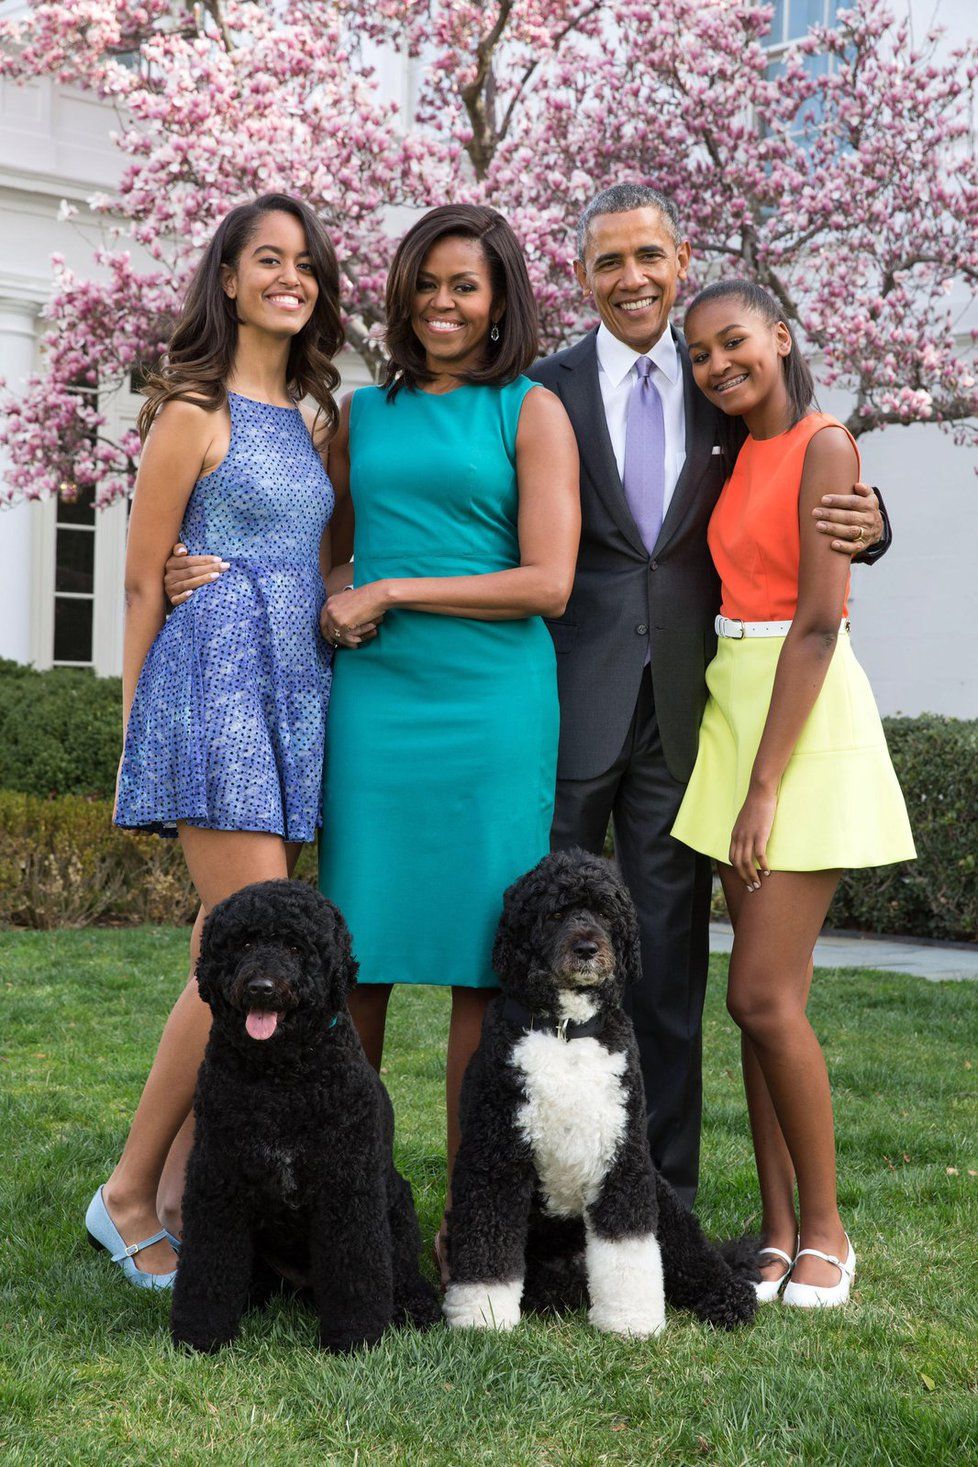 Rodina Obamových: (zleva) Malla, Michelle, Barack a Sasha, dole pejsci (zleva): Bo a Sunny.